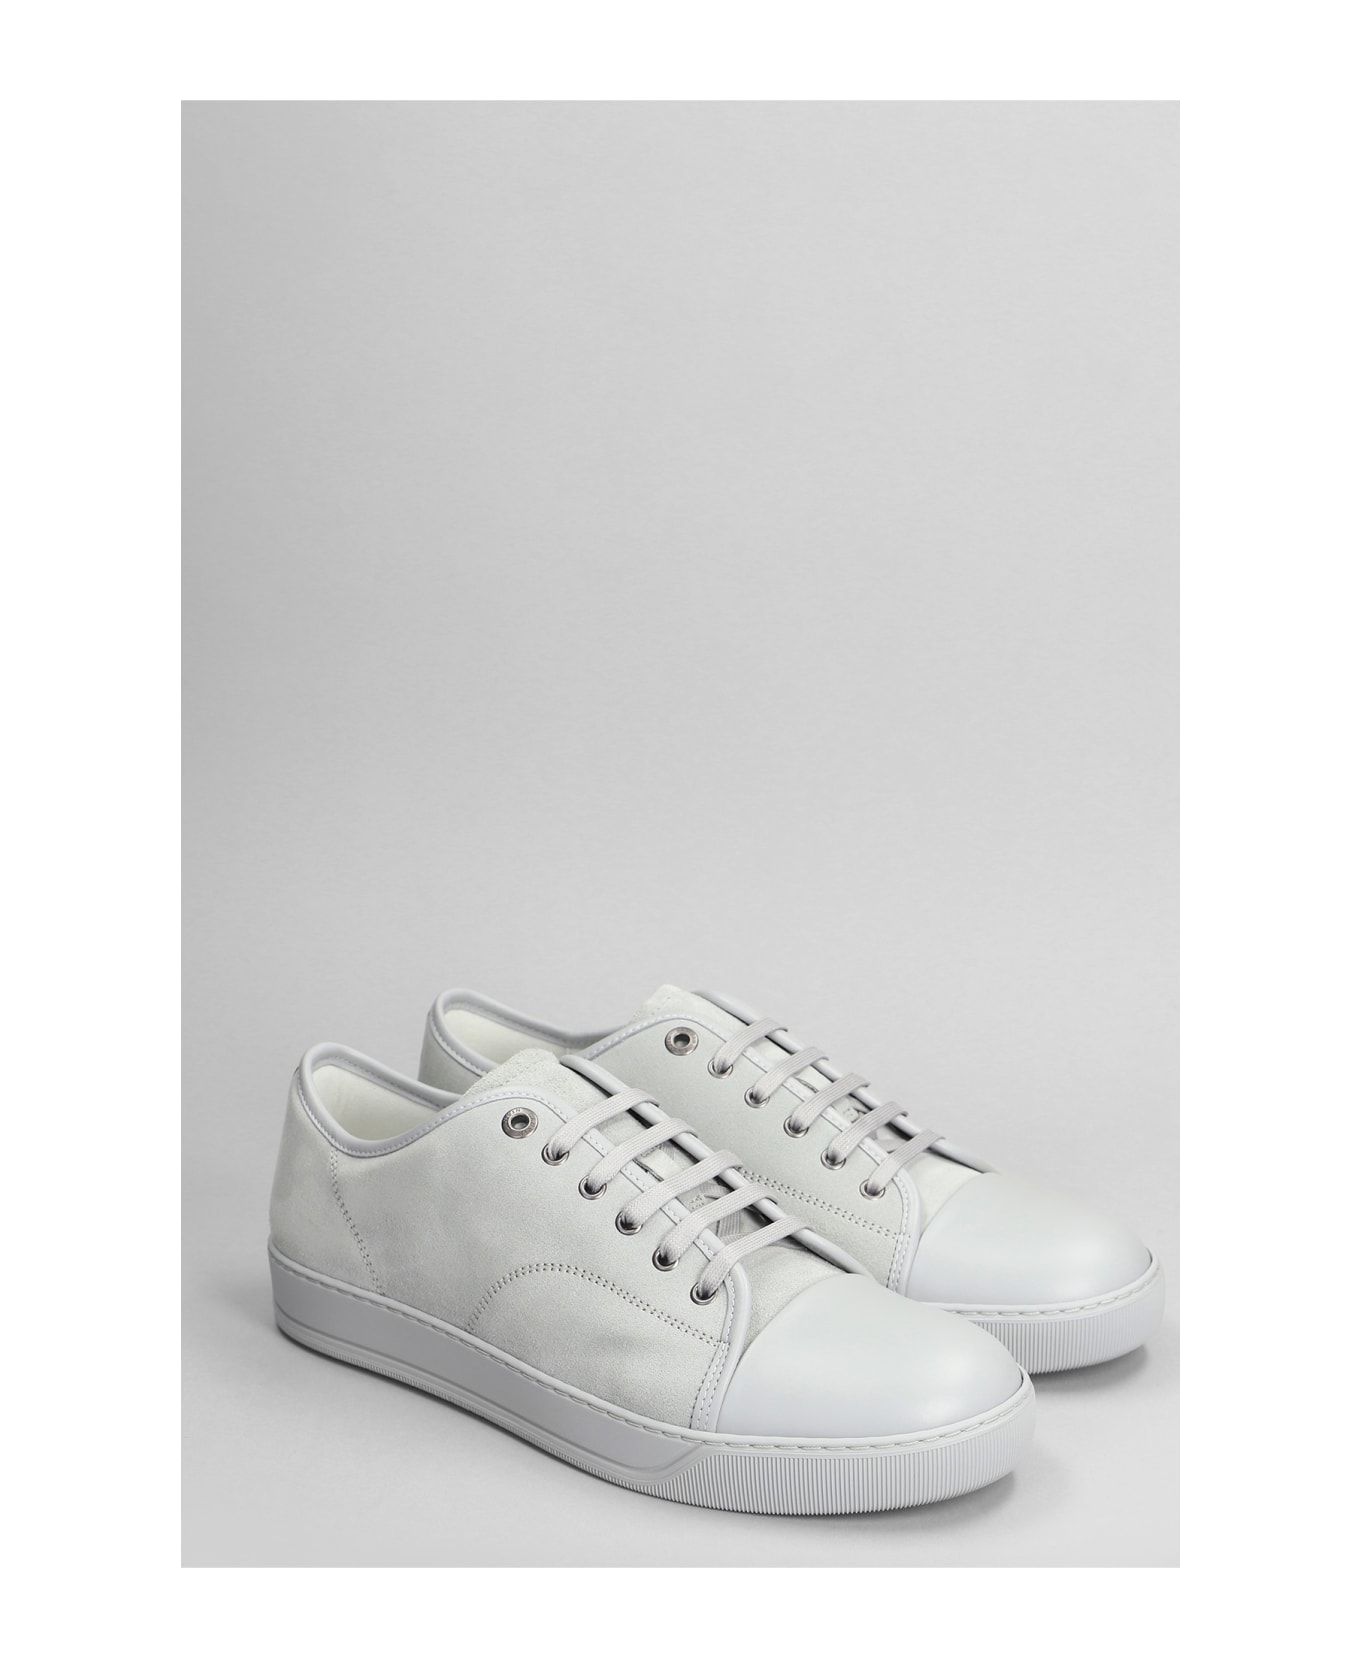 Lanvin Dbb1 Sneakers In Grey Suede - grey スニーカー